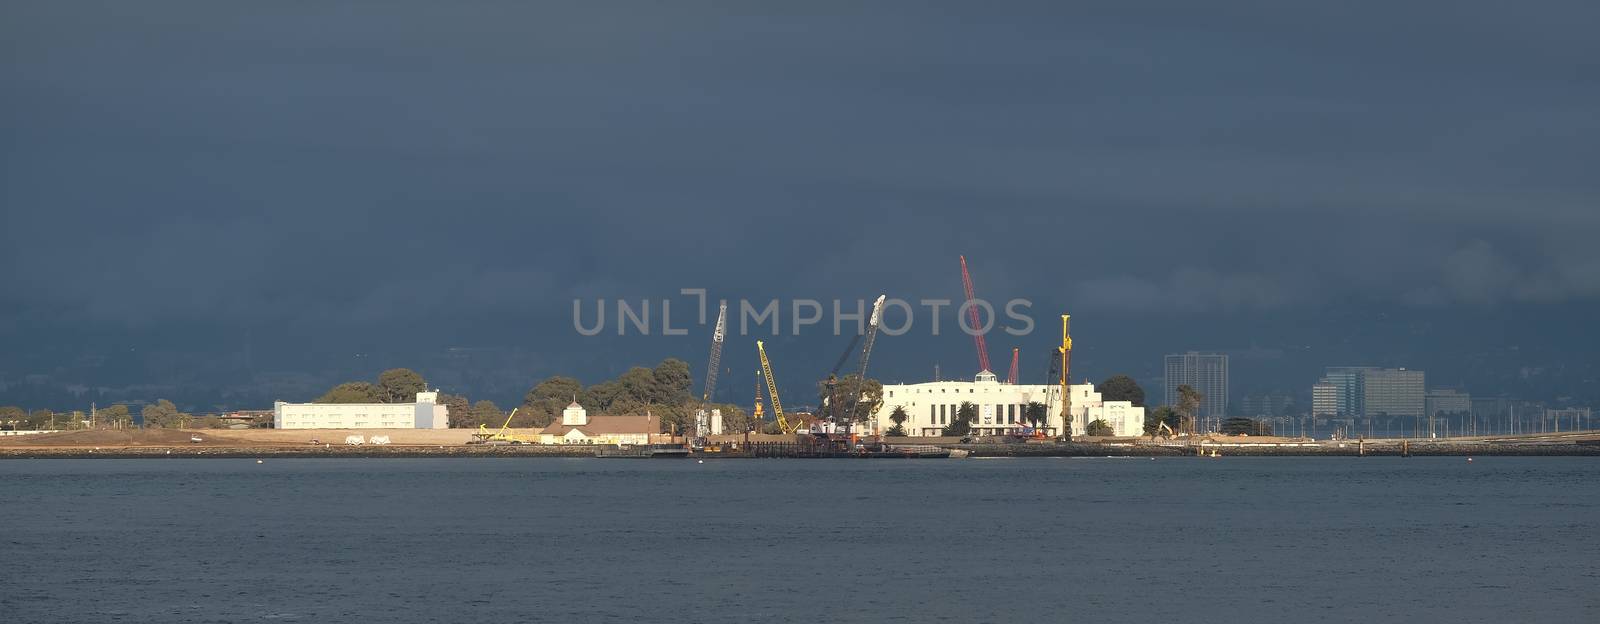 Construction Cranes on Stormy Coast by dbvirago